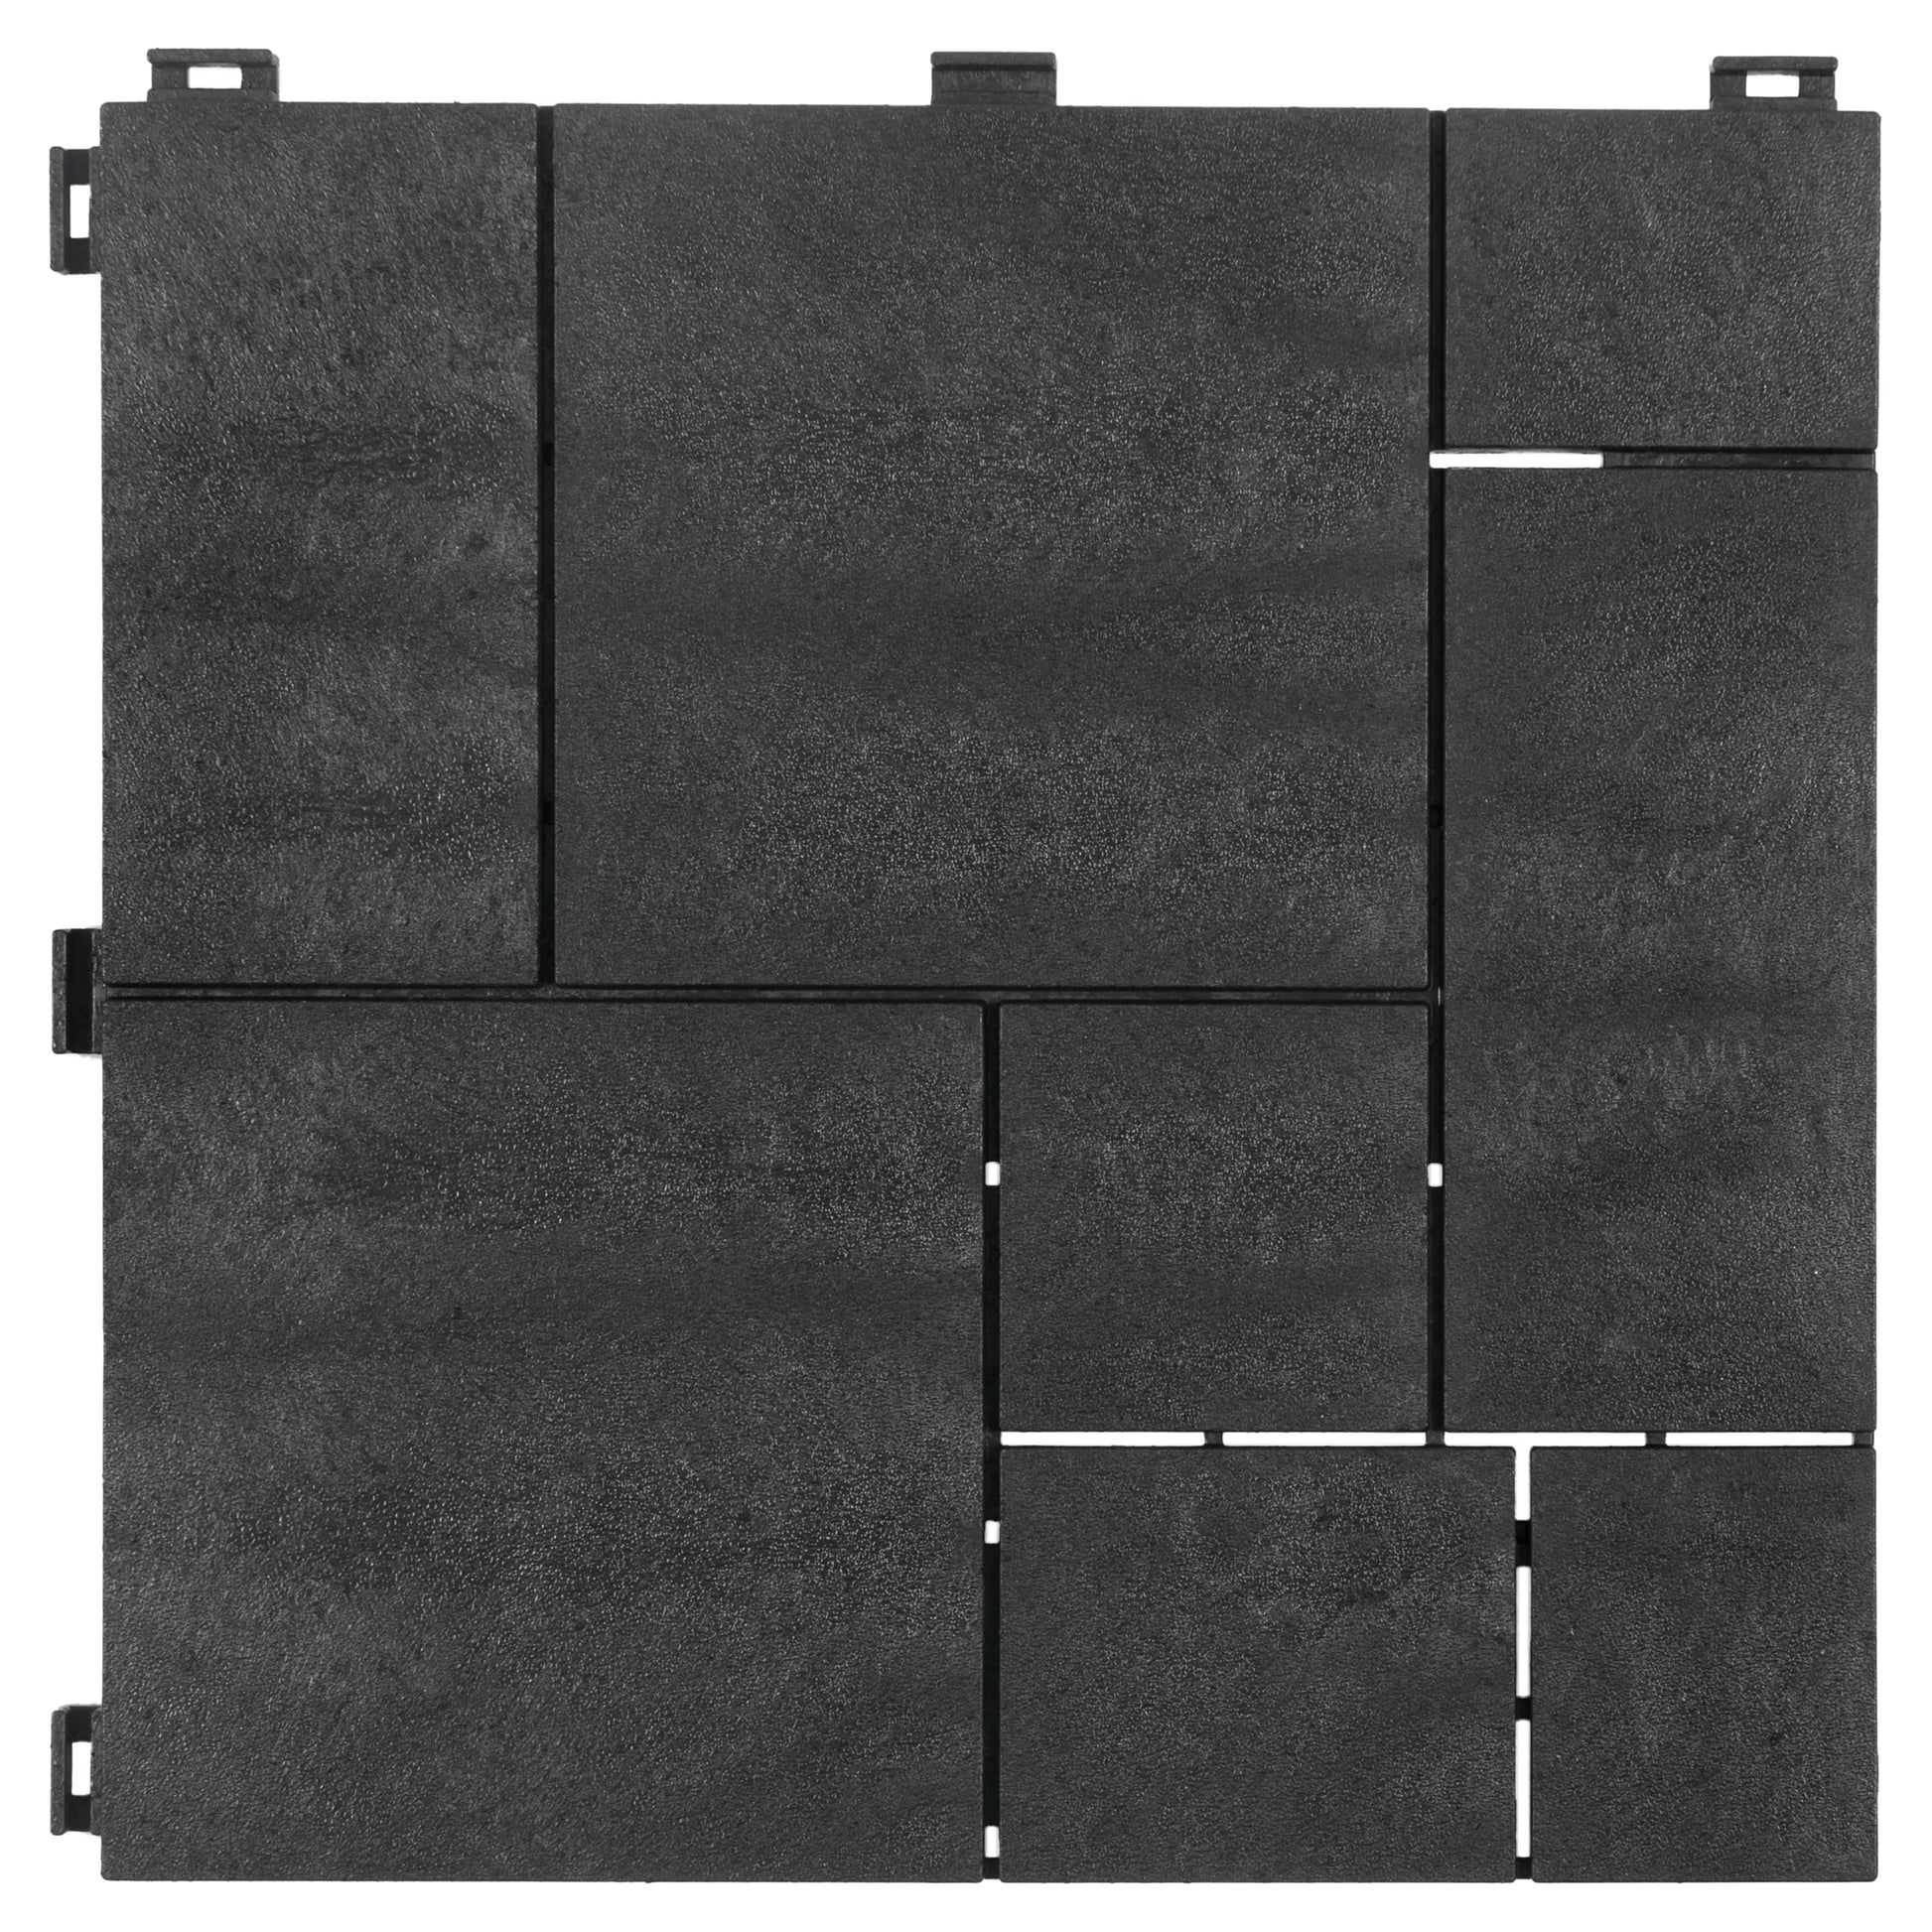 Nicoman Composite Deck Tiles